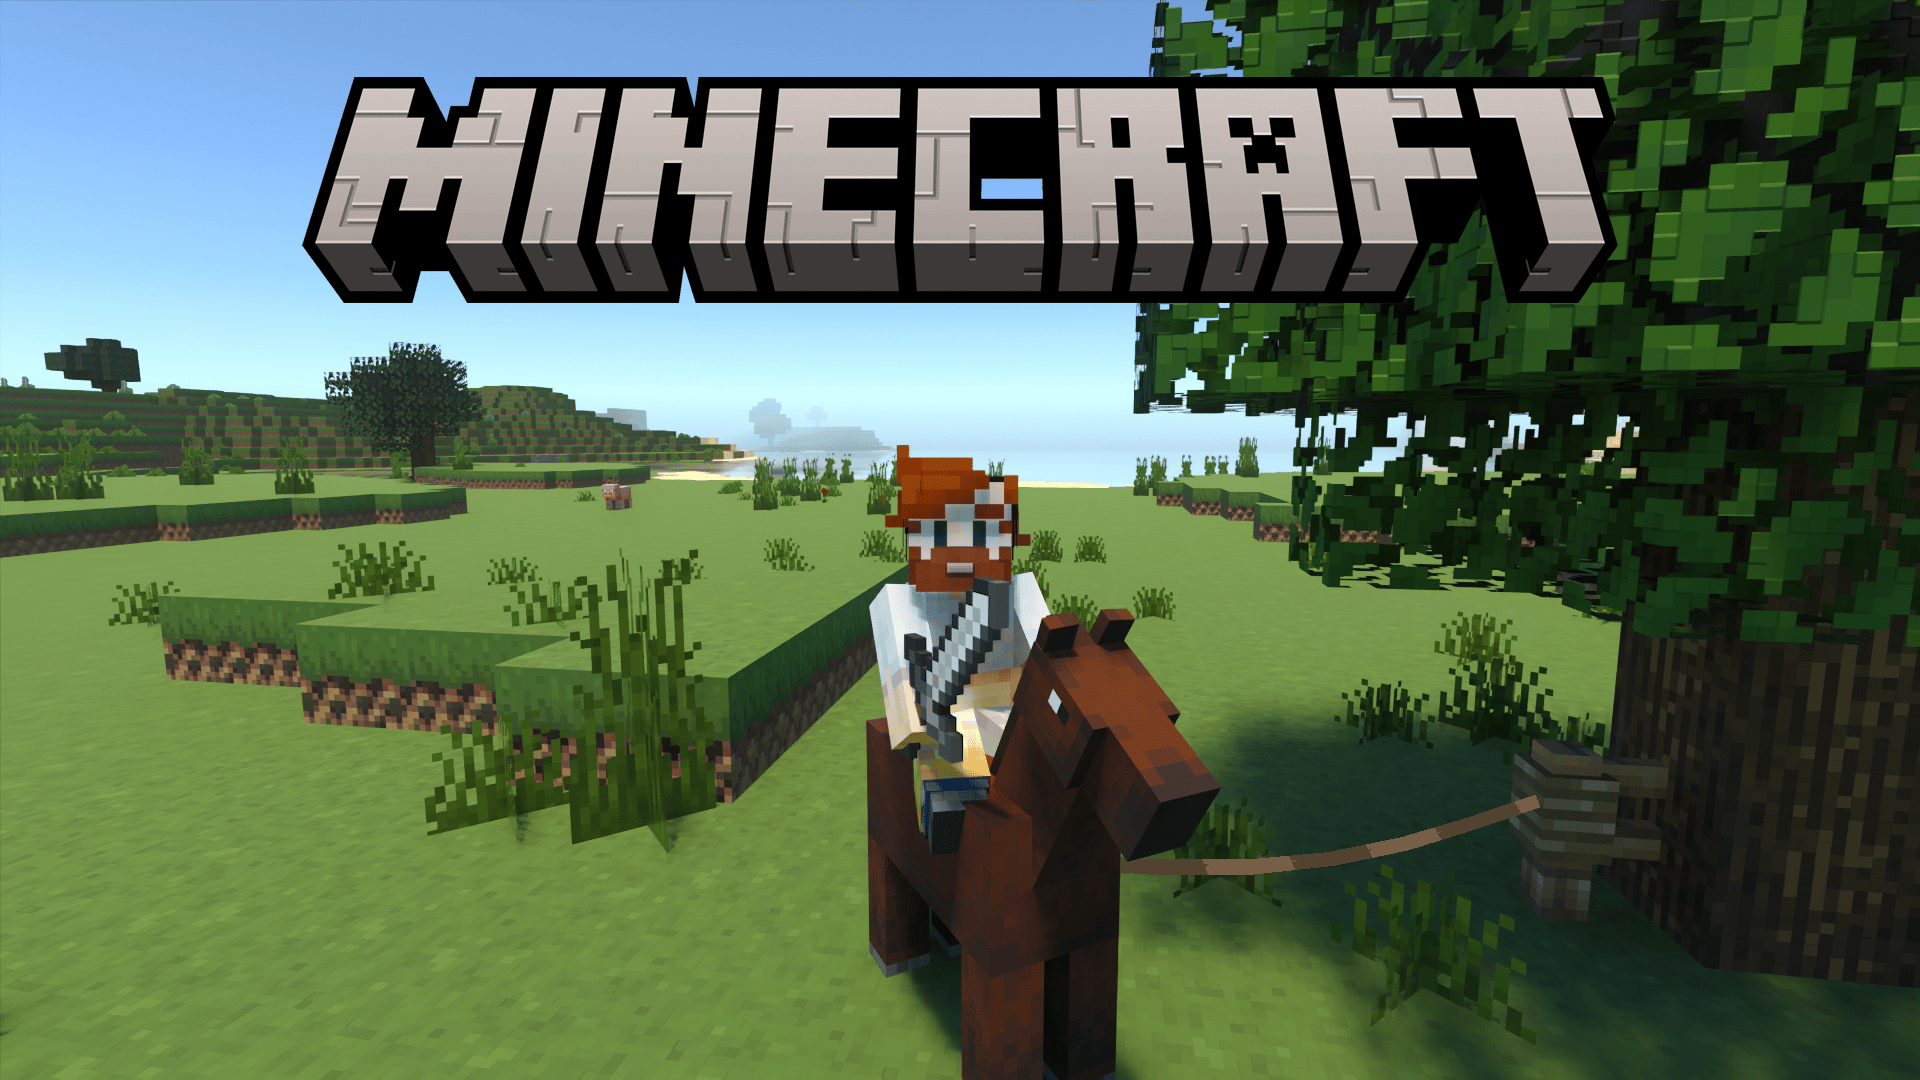 Screenshot of player on Minecraft horse